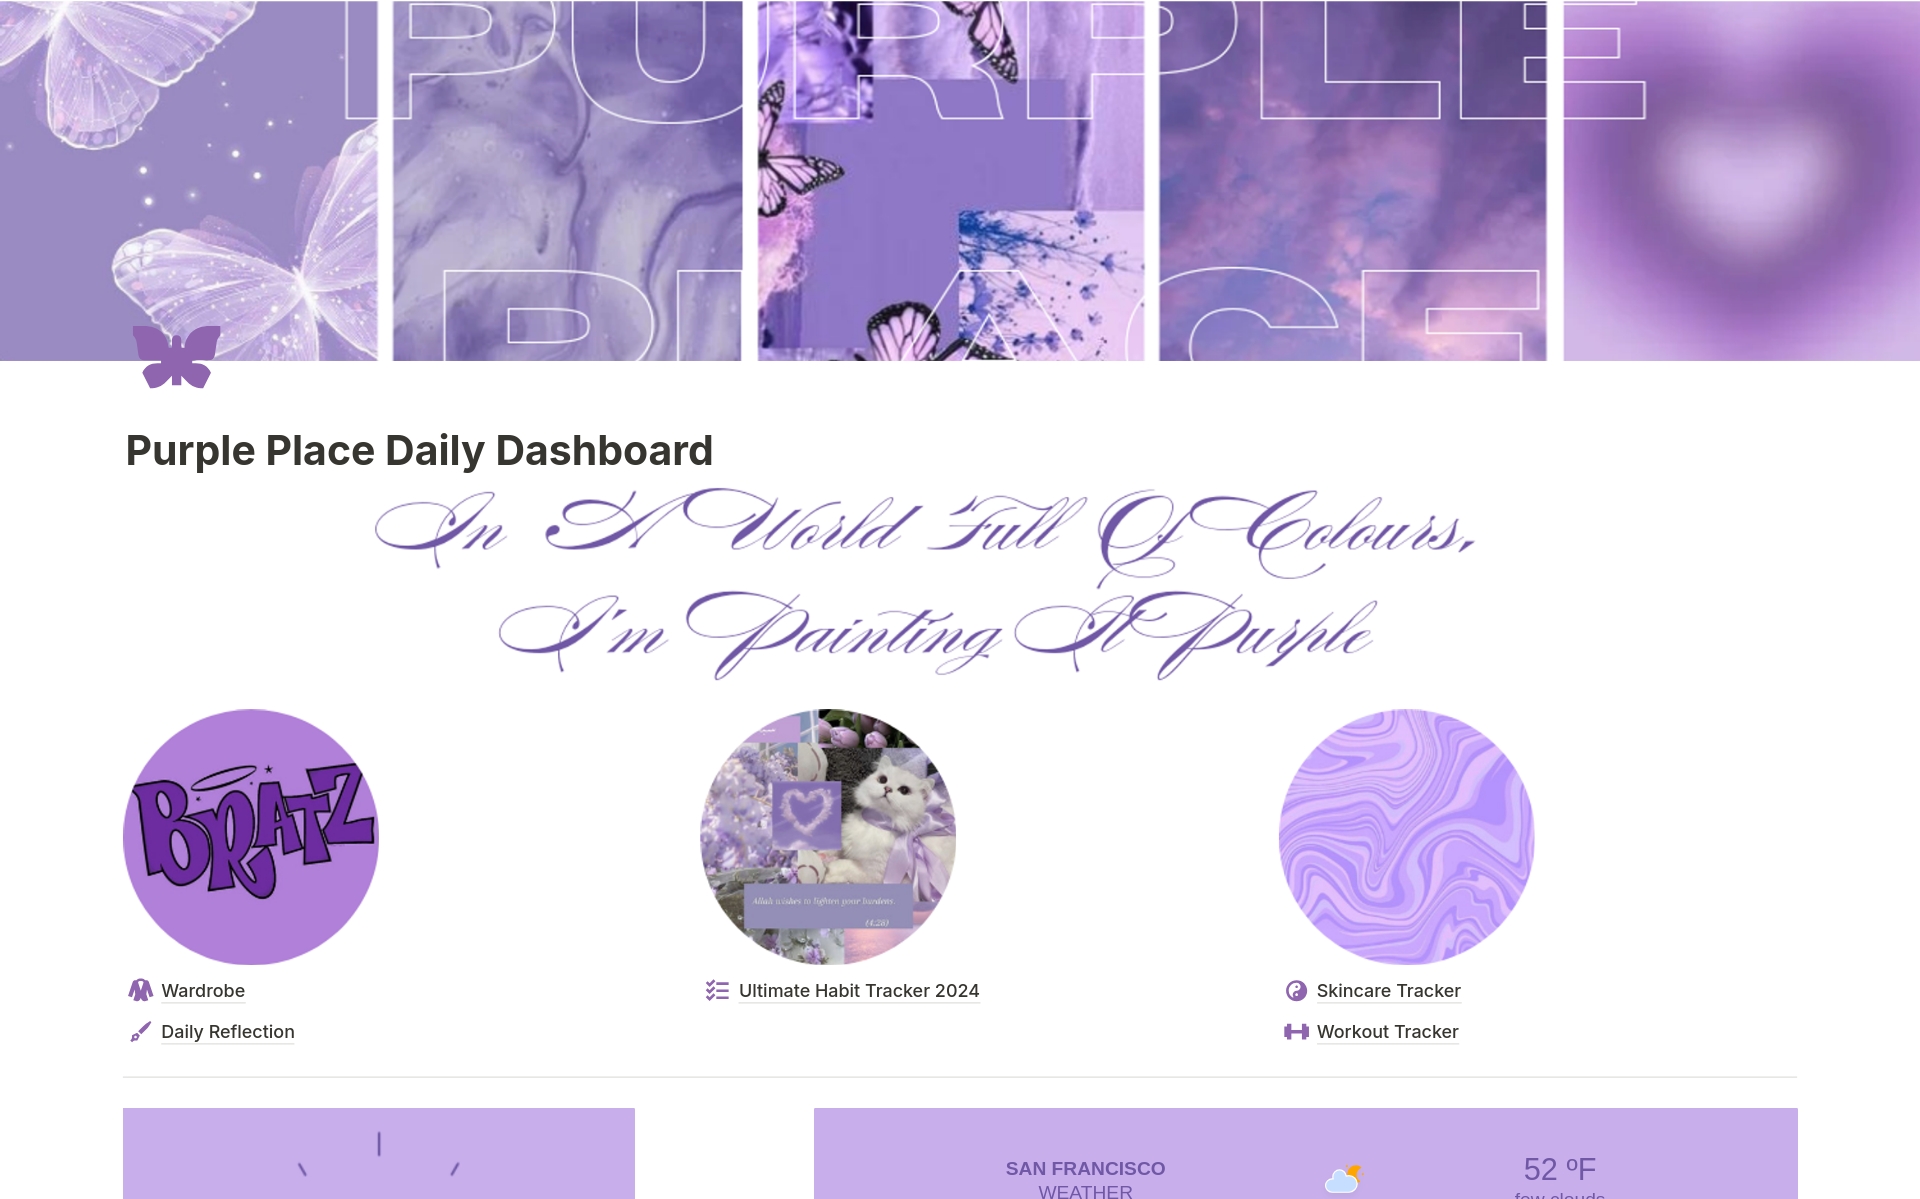 Mallin esikatselu nimelle 'Purple Place' Daily Dashboard